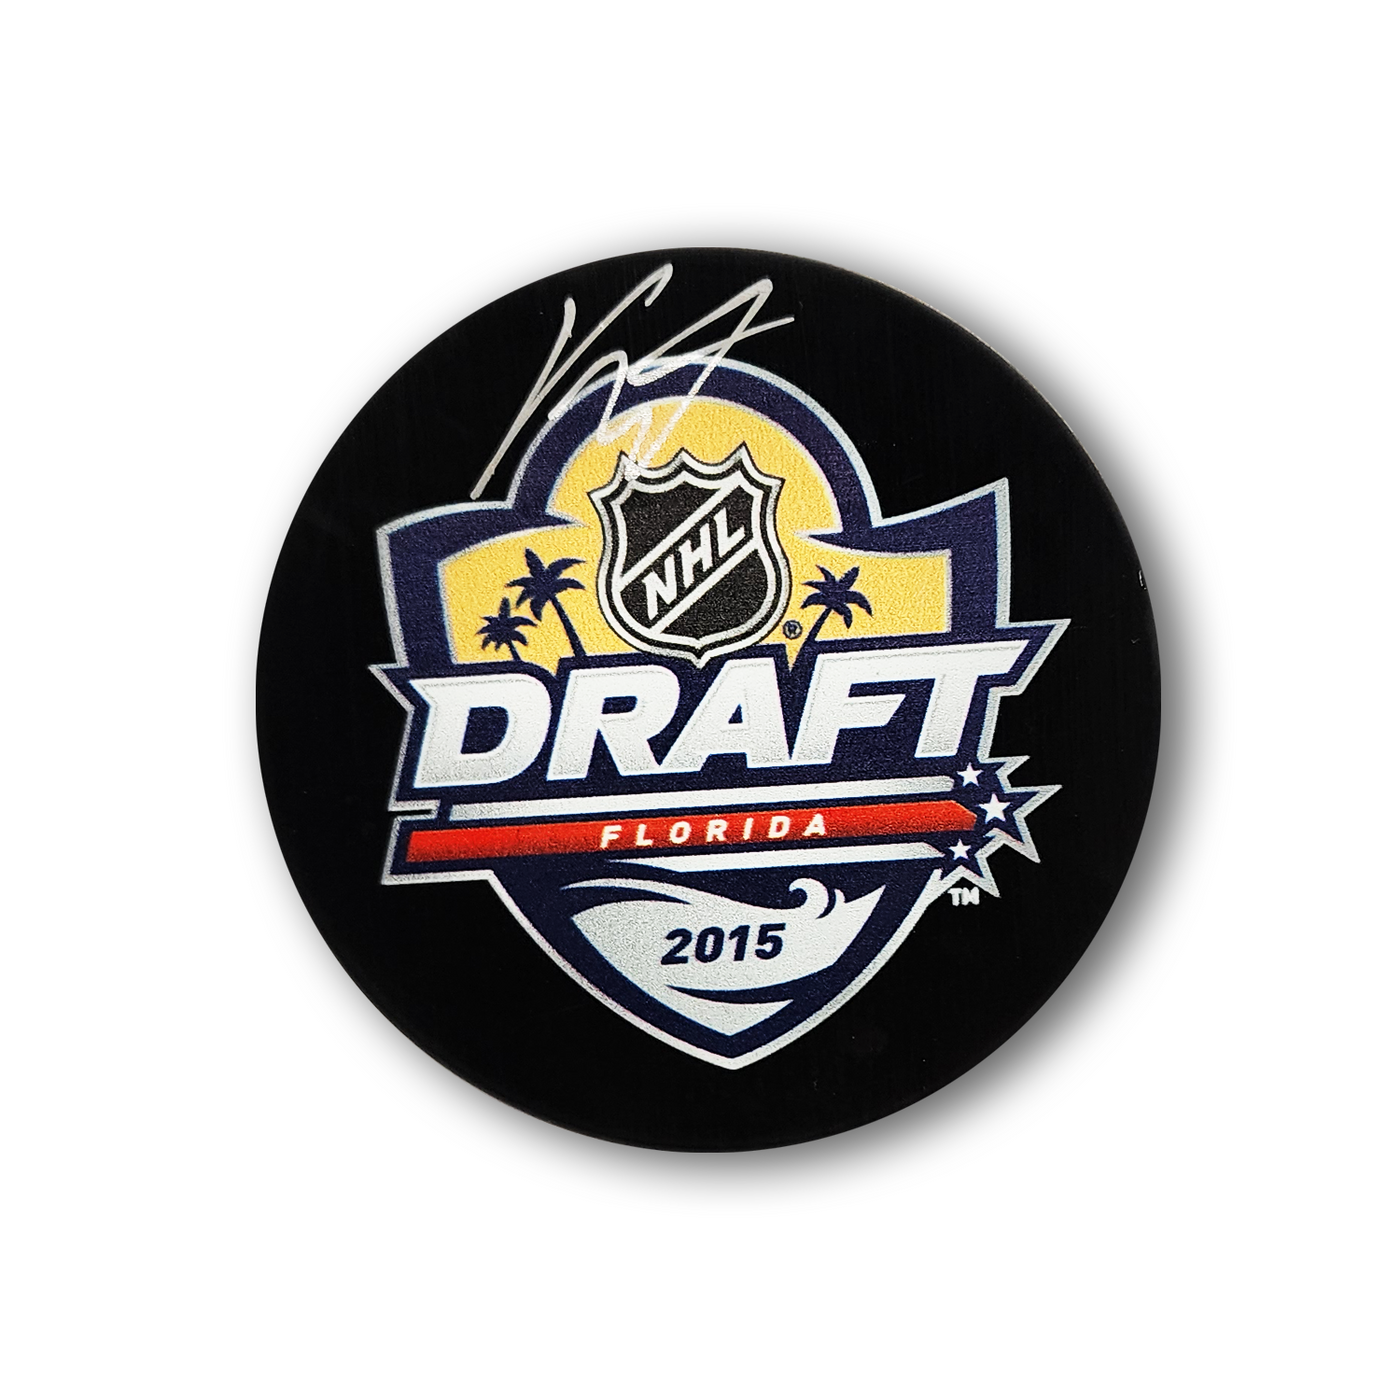 Kirill Kaprizov 2015 NHL Draft Autographed Hockey Puck